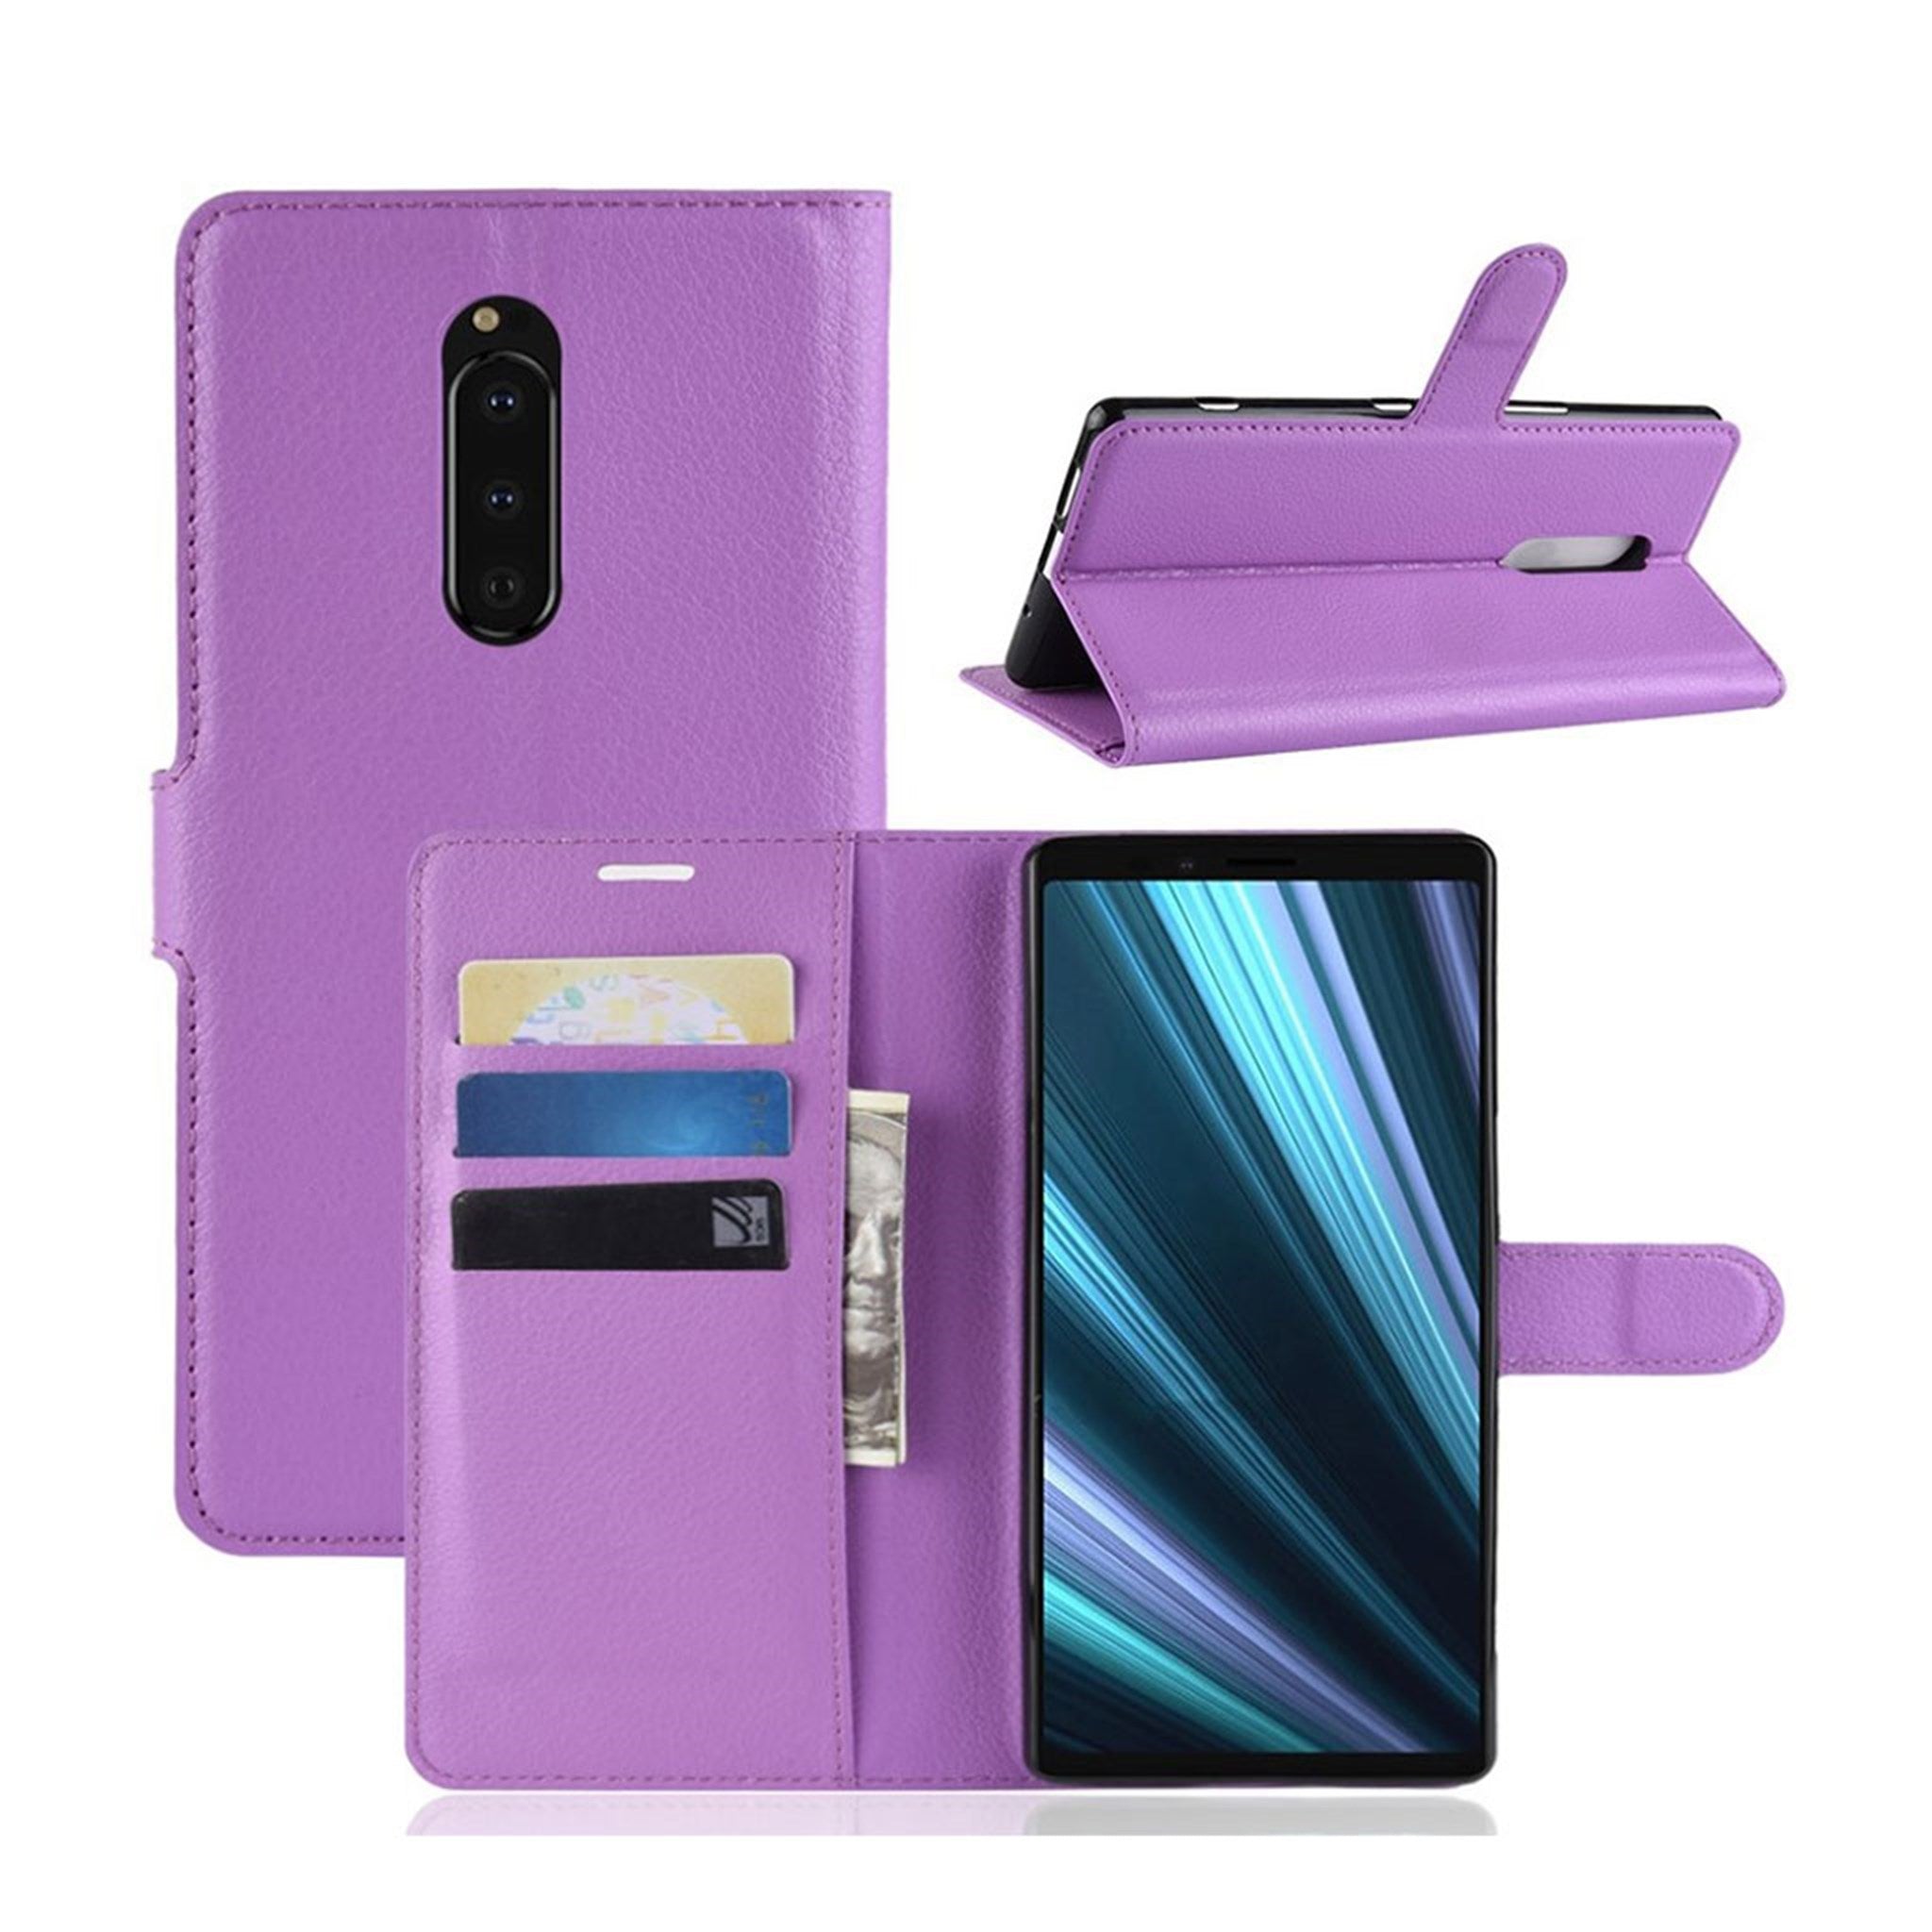 Sony Xperia XZ4 litchi skin leather flip case - Purple